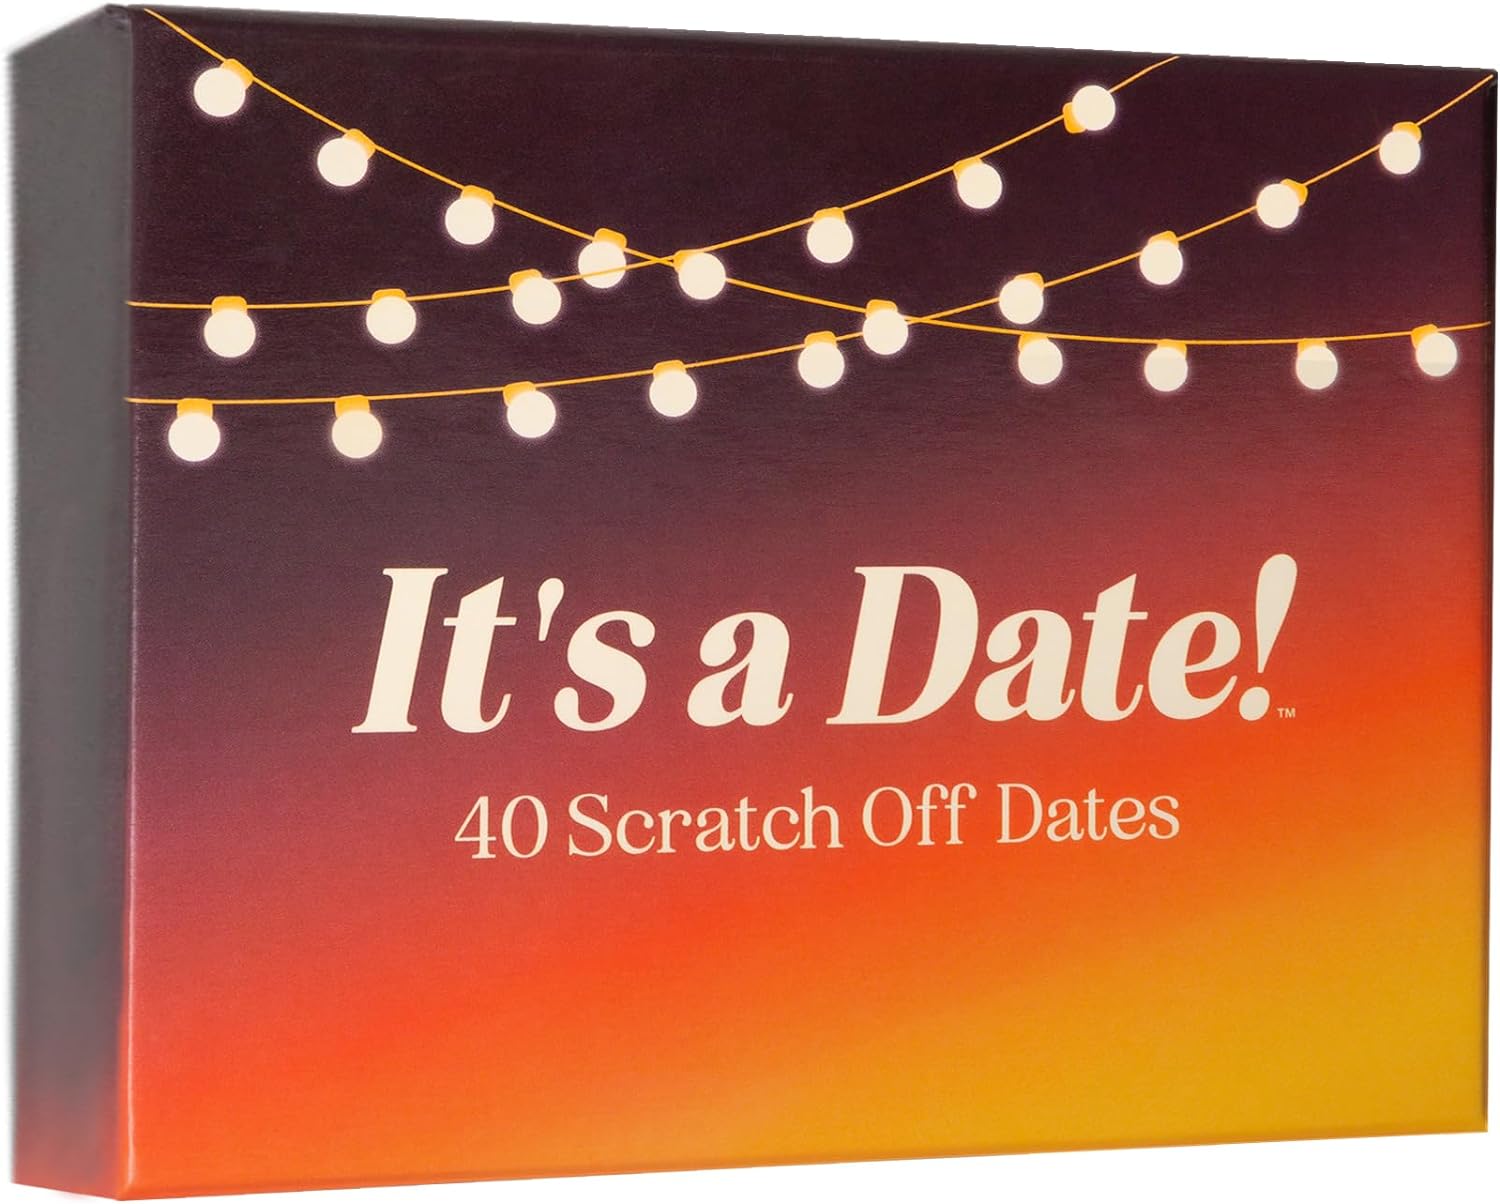 Scratch and Spark Romance: 'It's a Date!' Scratch Off Ideas